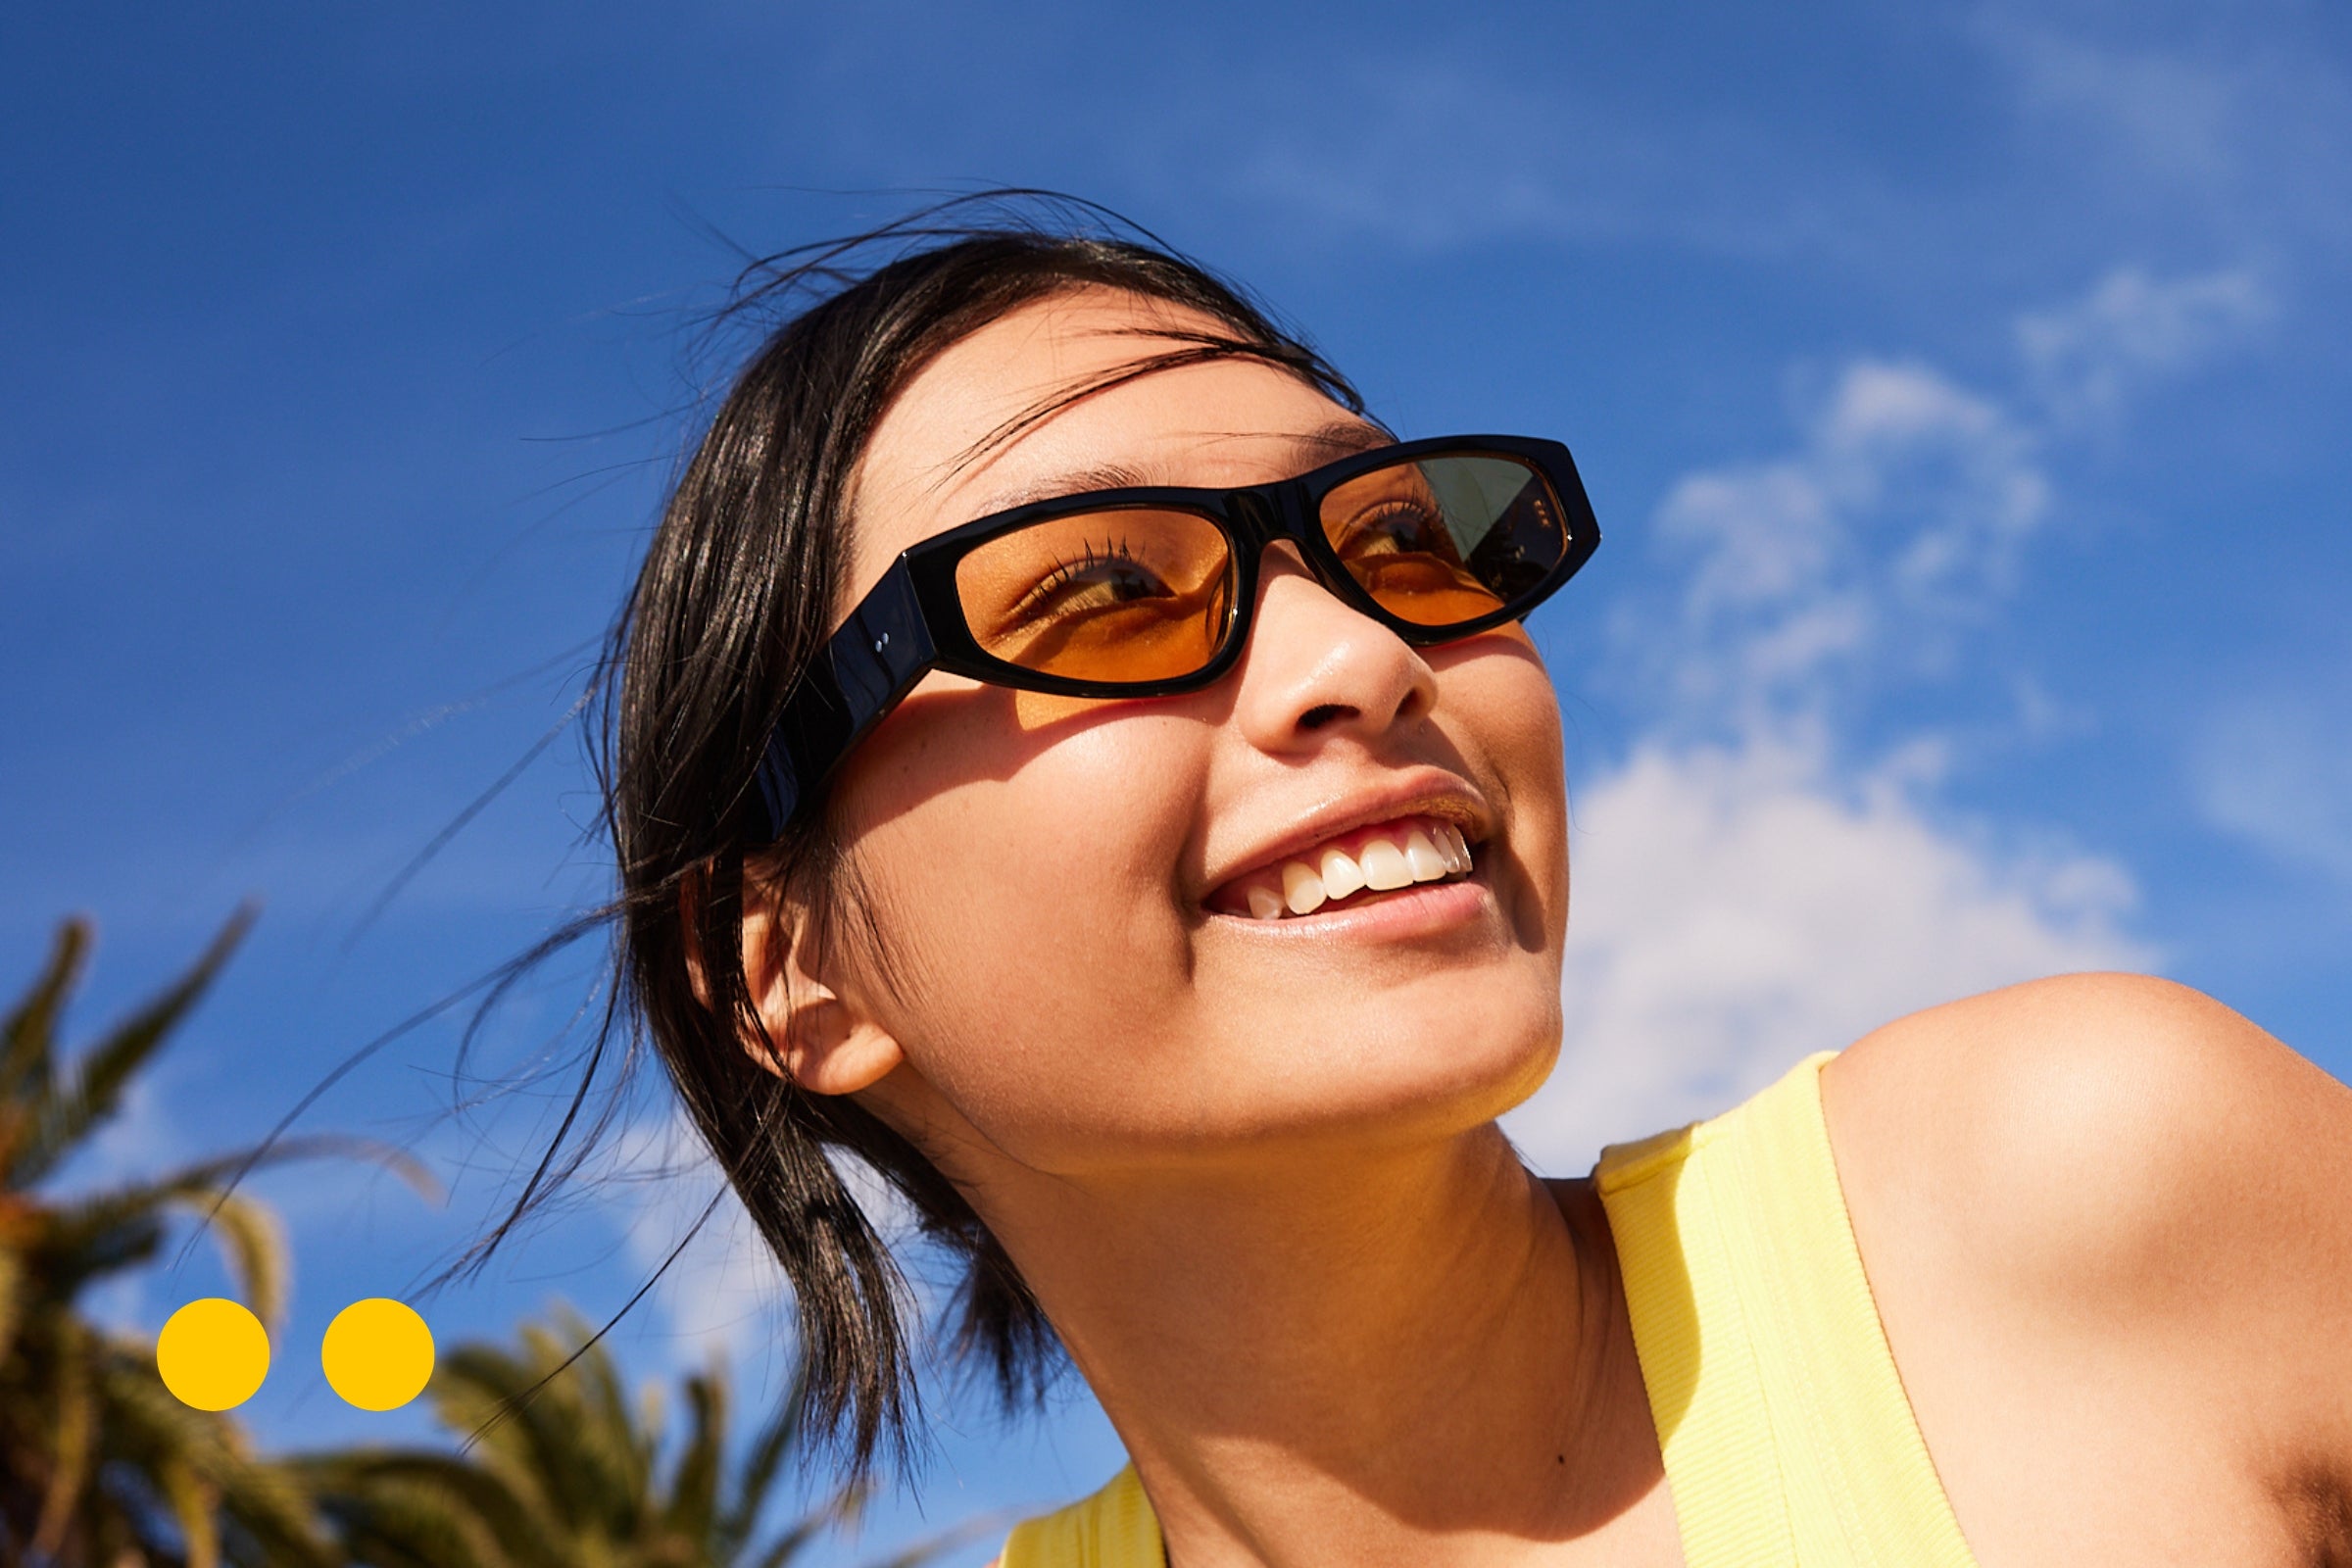 THE VOID - Acetate Aviator Sunglasses – sito shades USA